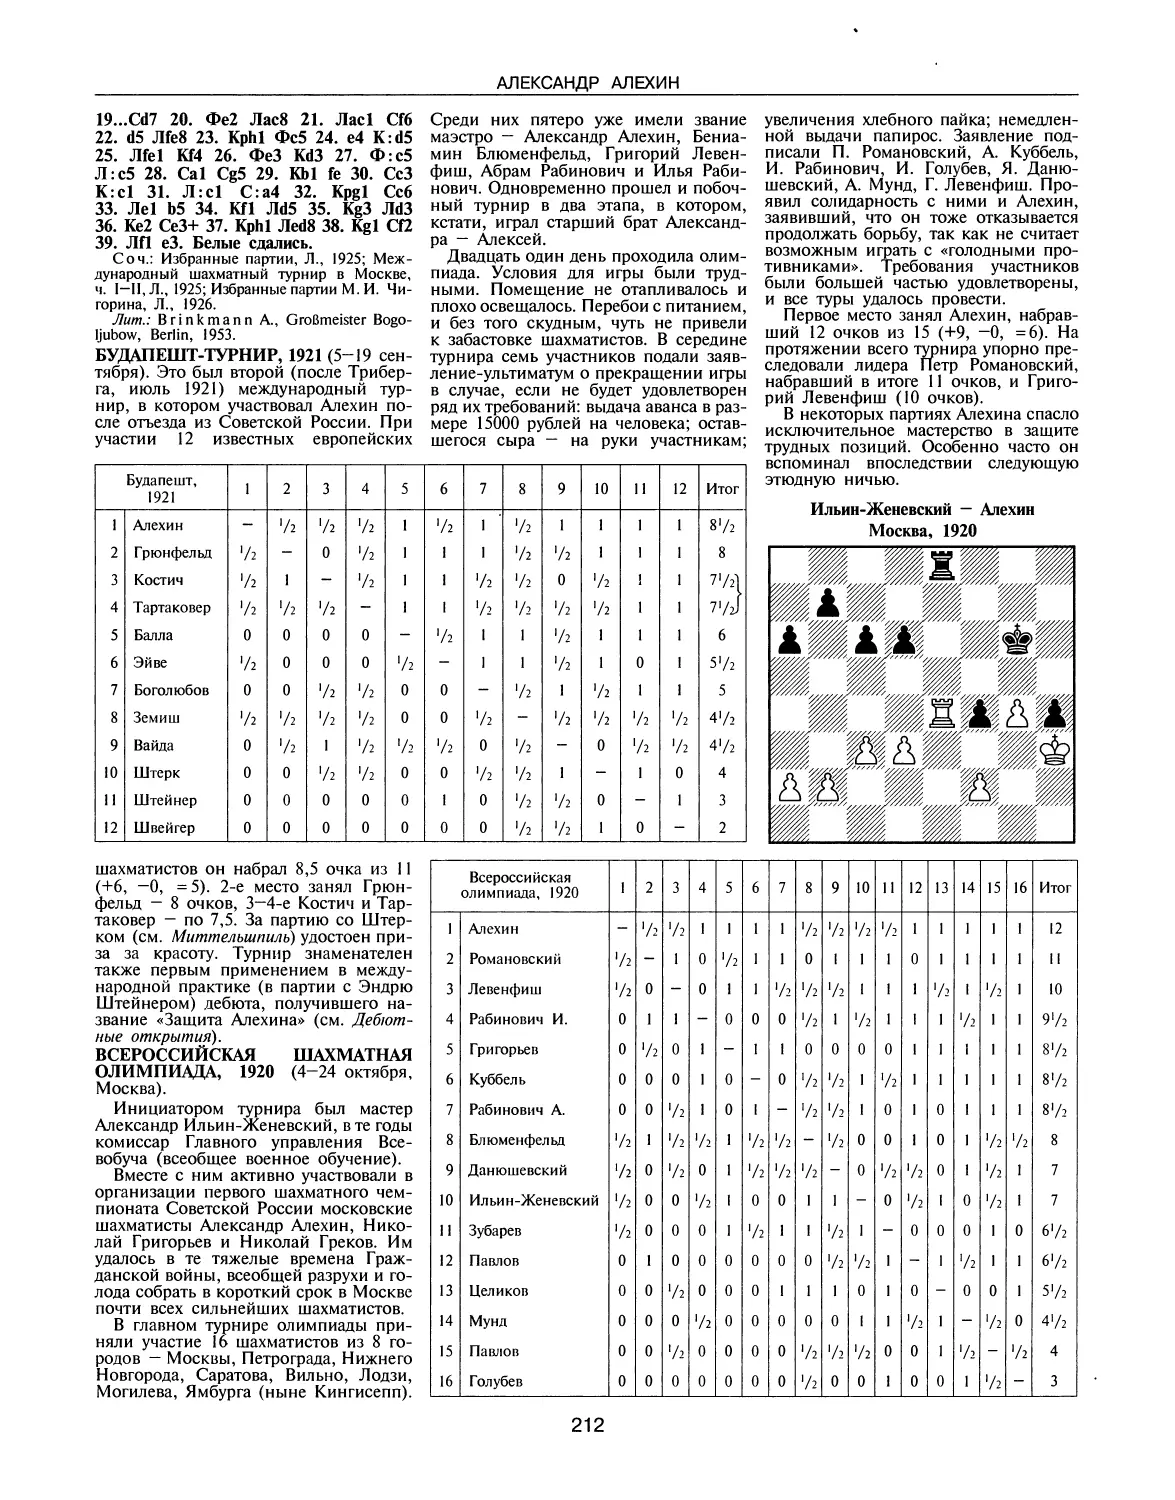 Будапешт-турнир, 1921
Всероссийская шахматная олимпиада, 1920